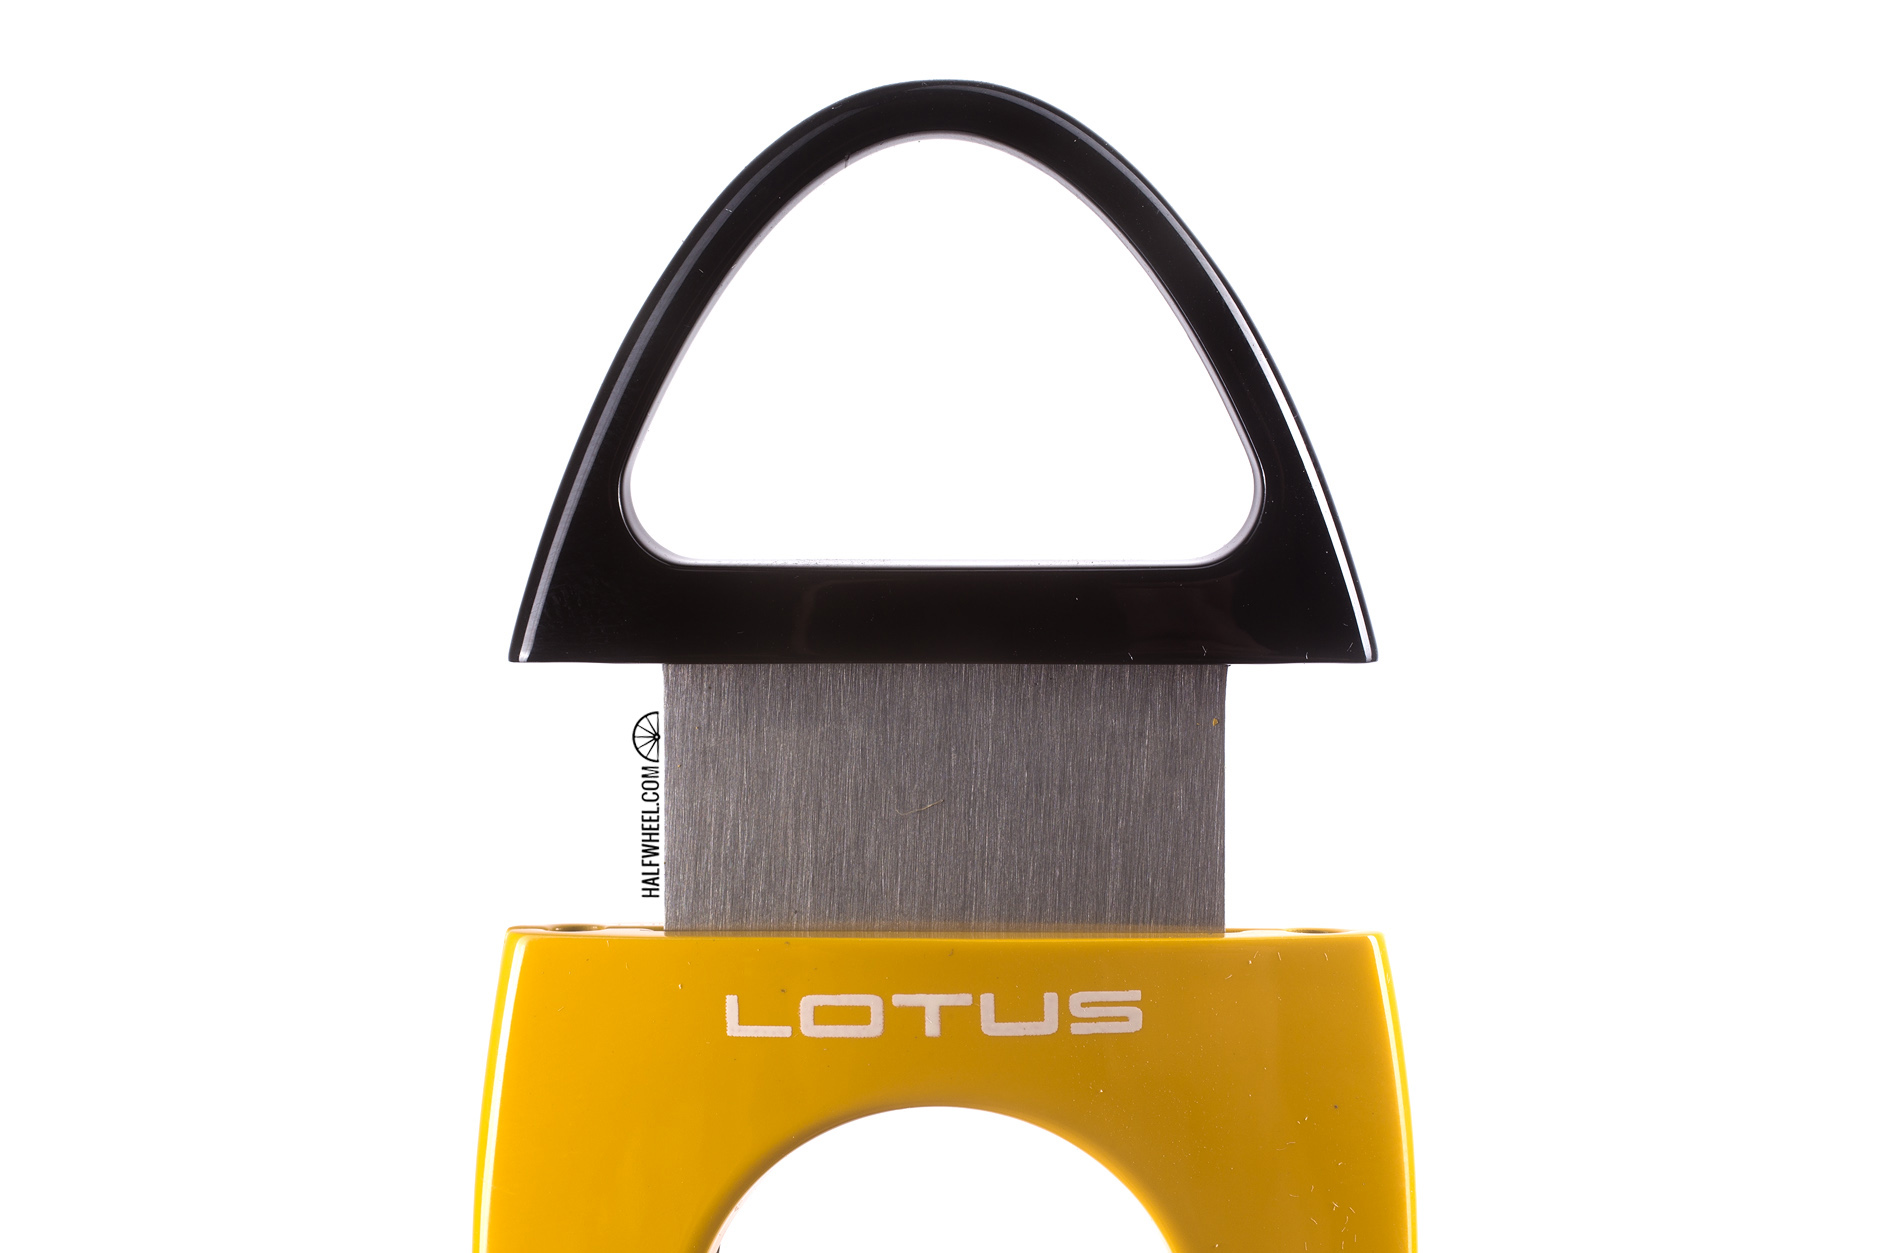 Lotus Jaws Cutter top